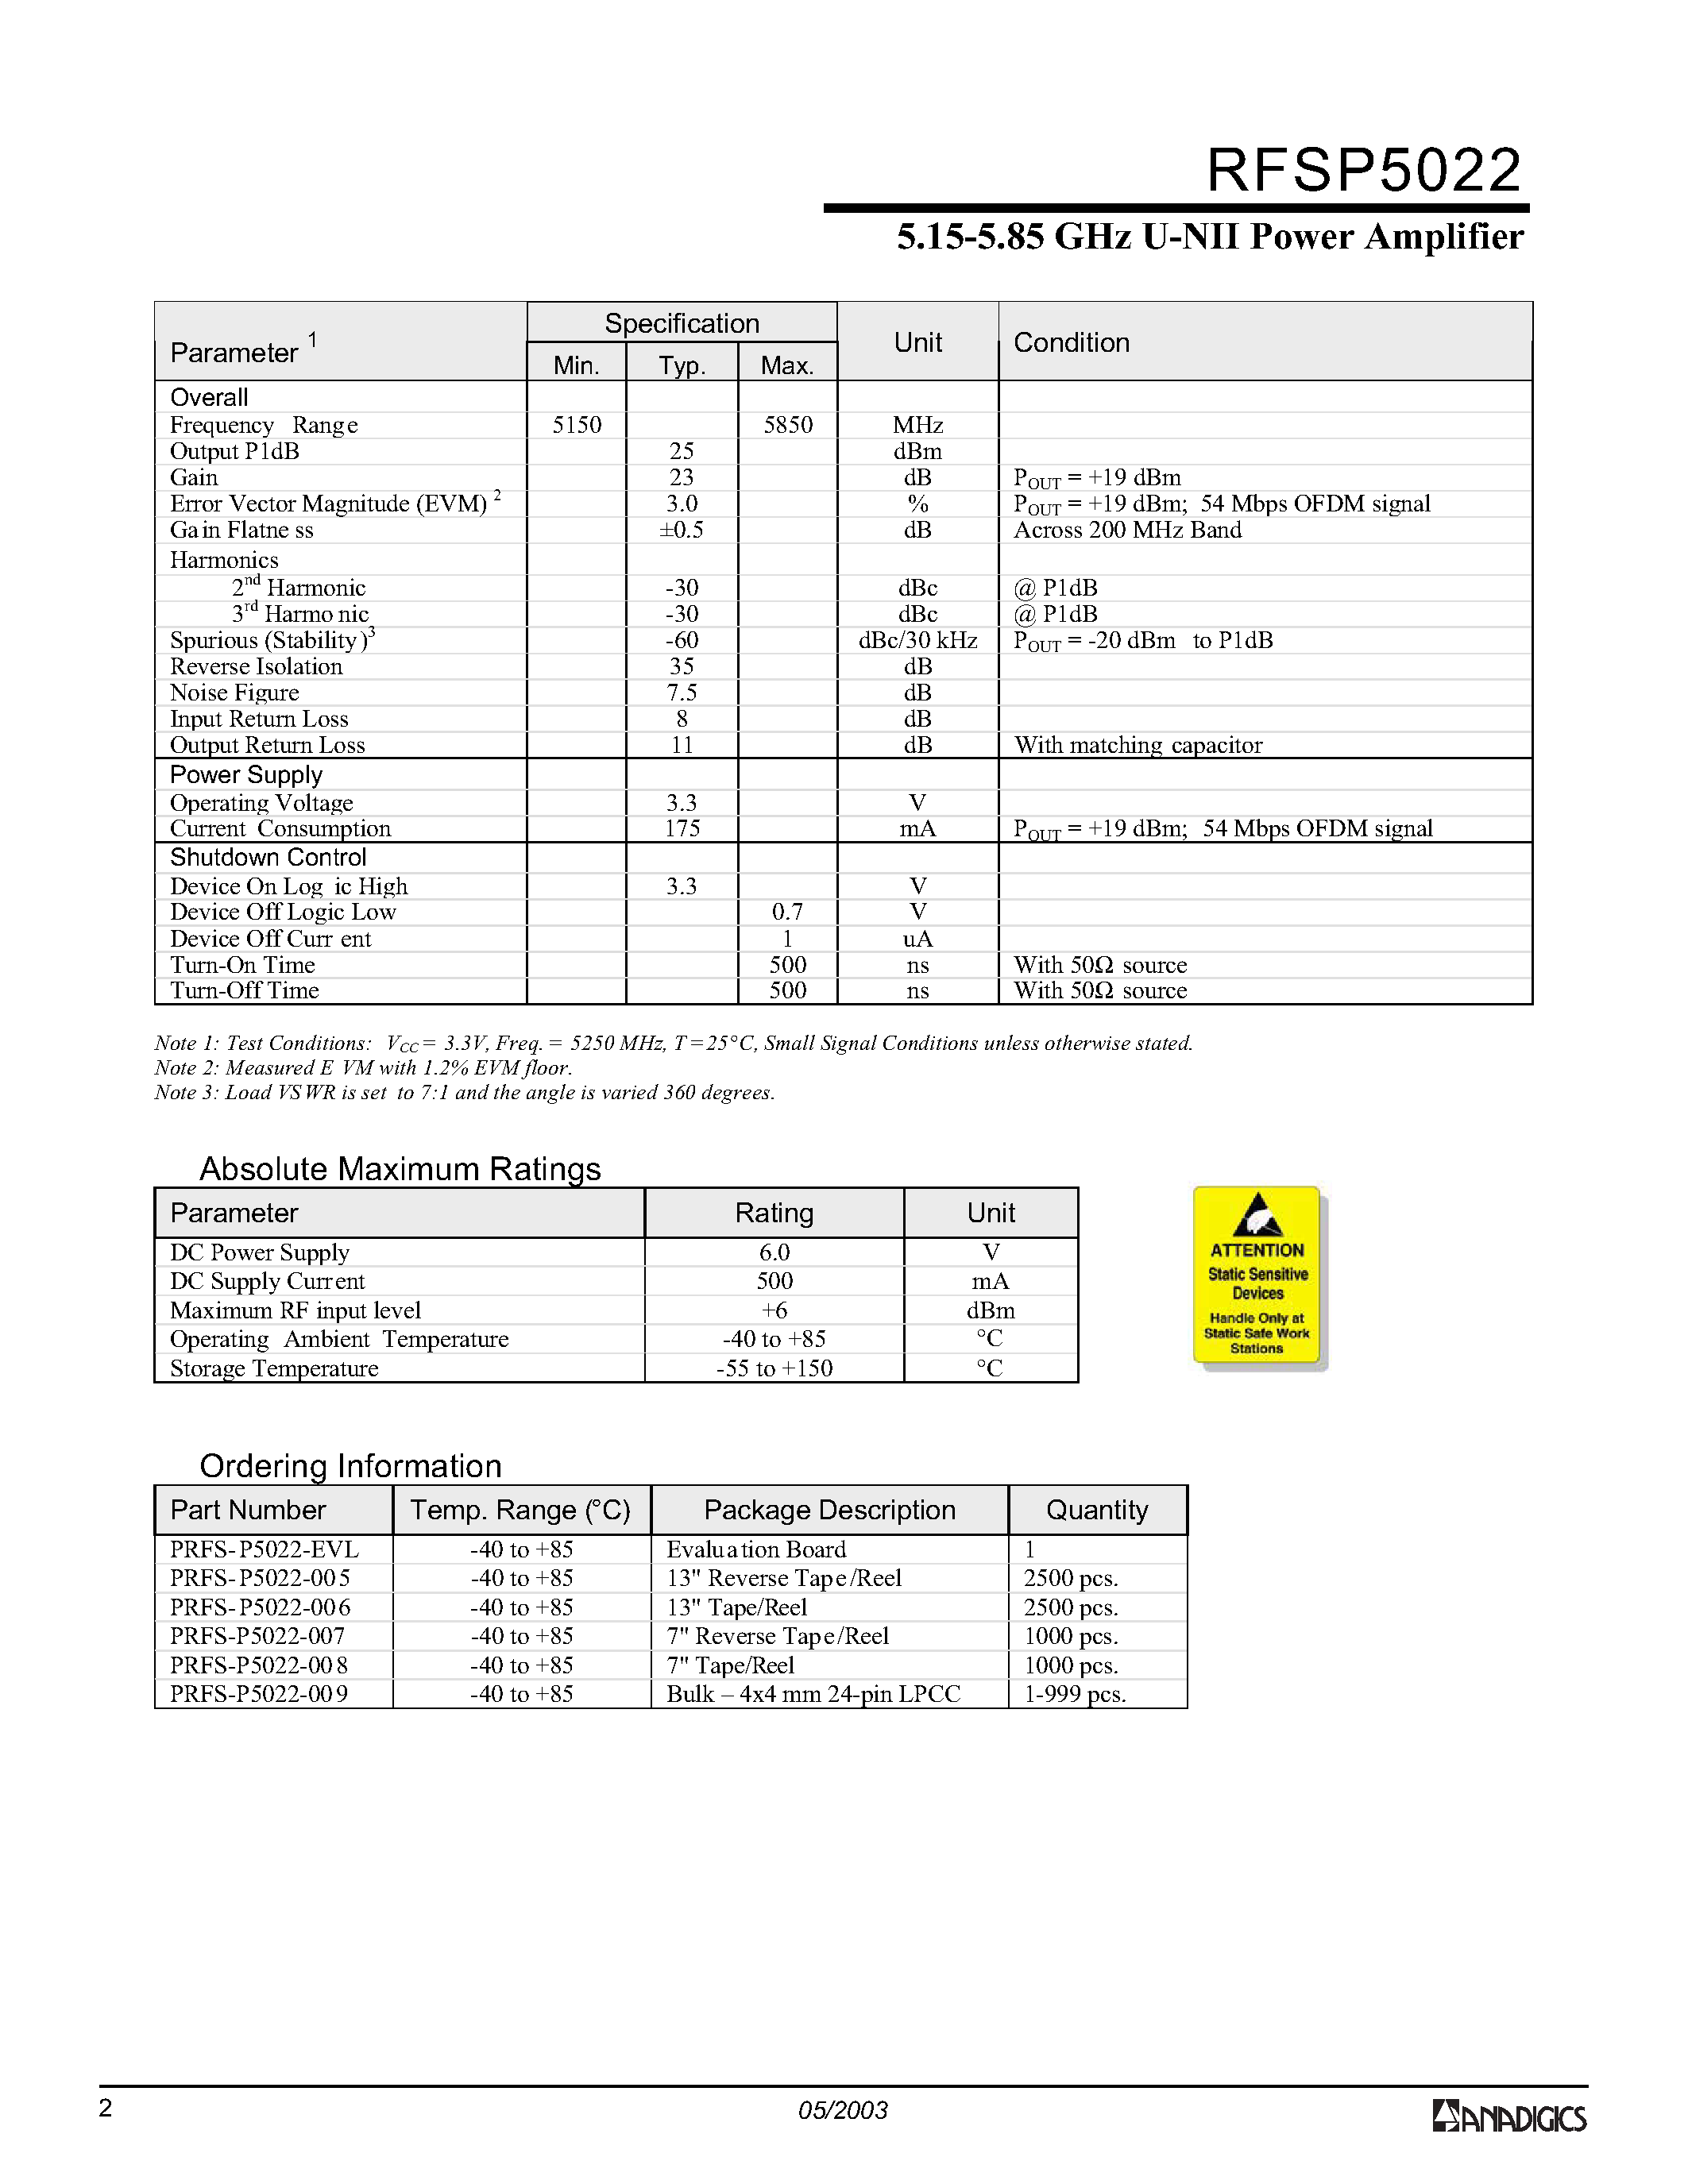 Datasheet PRFS-P5022-005 - 5.15-5.85 GHz U-NII Power Amplifier page 2